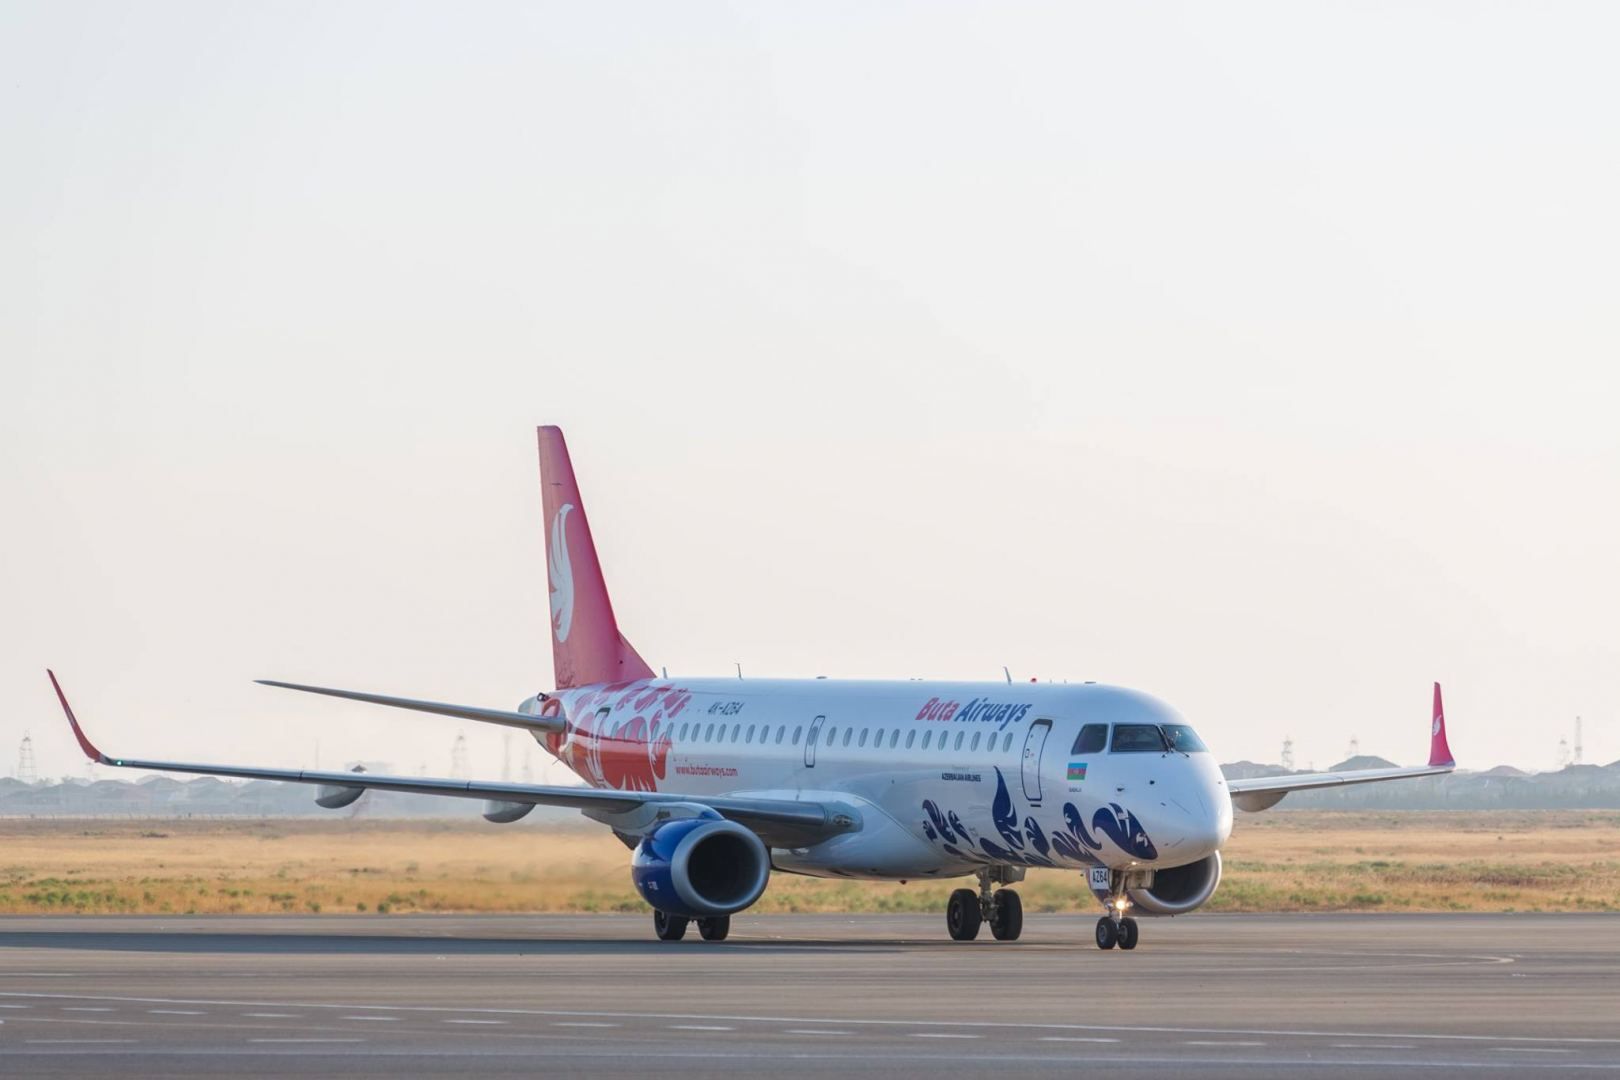 Buta Airways plane returns to Baku as weather conditions in Astrakhan worsen